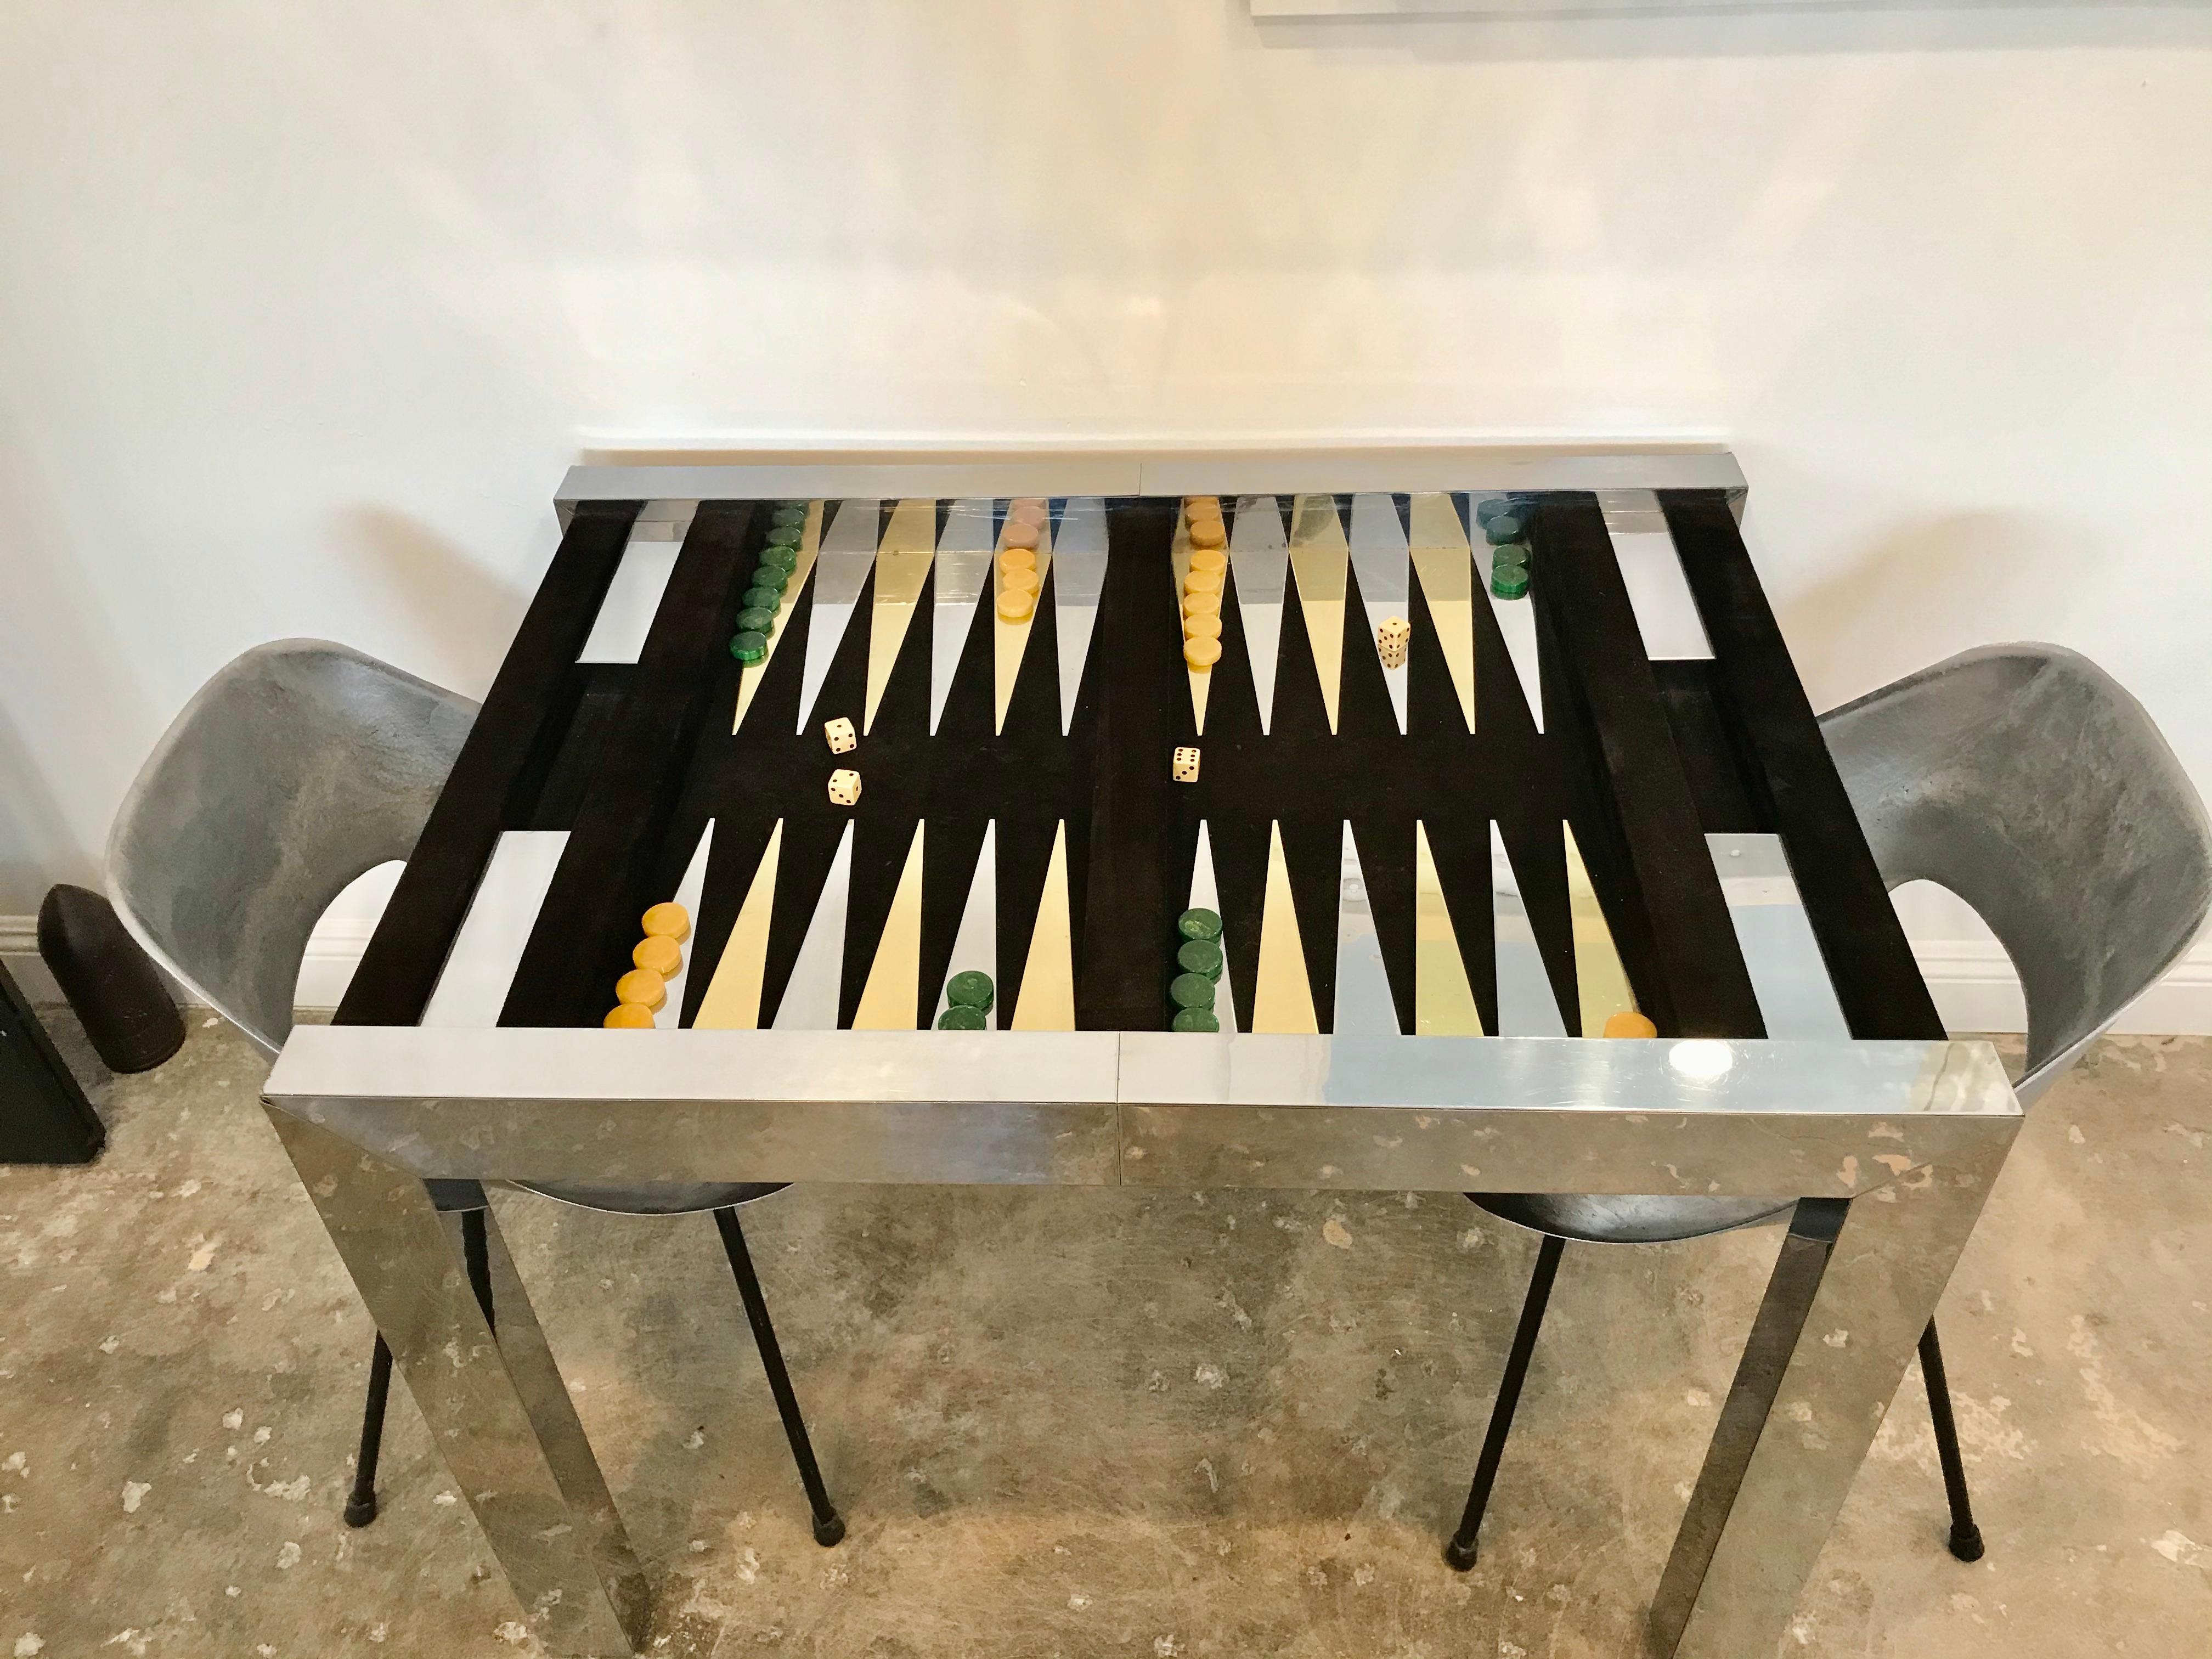 backgammon tables